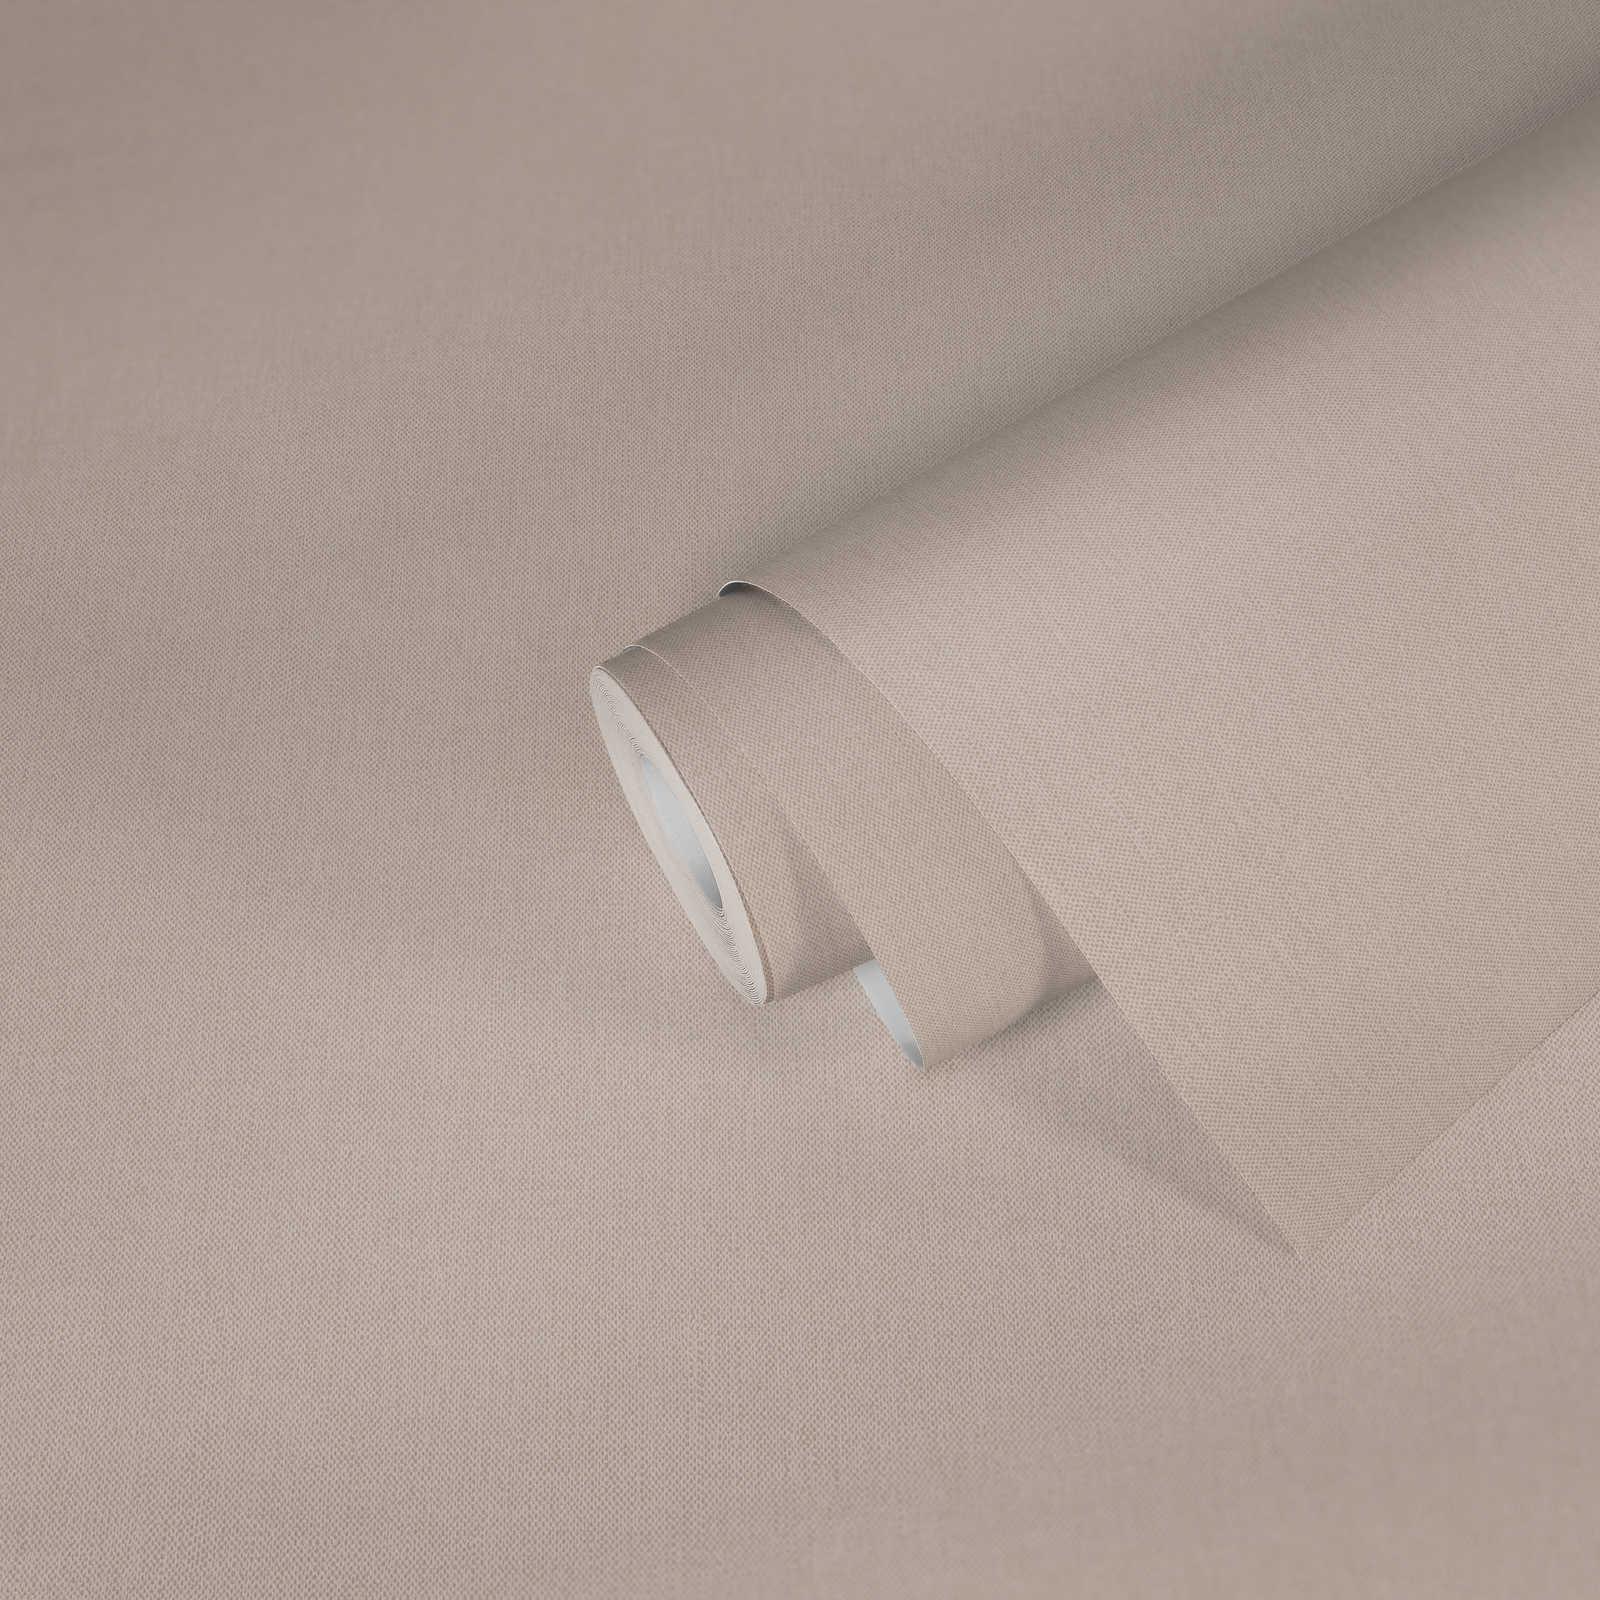             Non-woven wallpaper light beige monochrome with textile texture - beige, cream
        